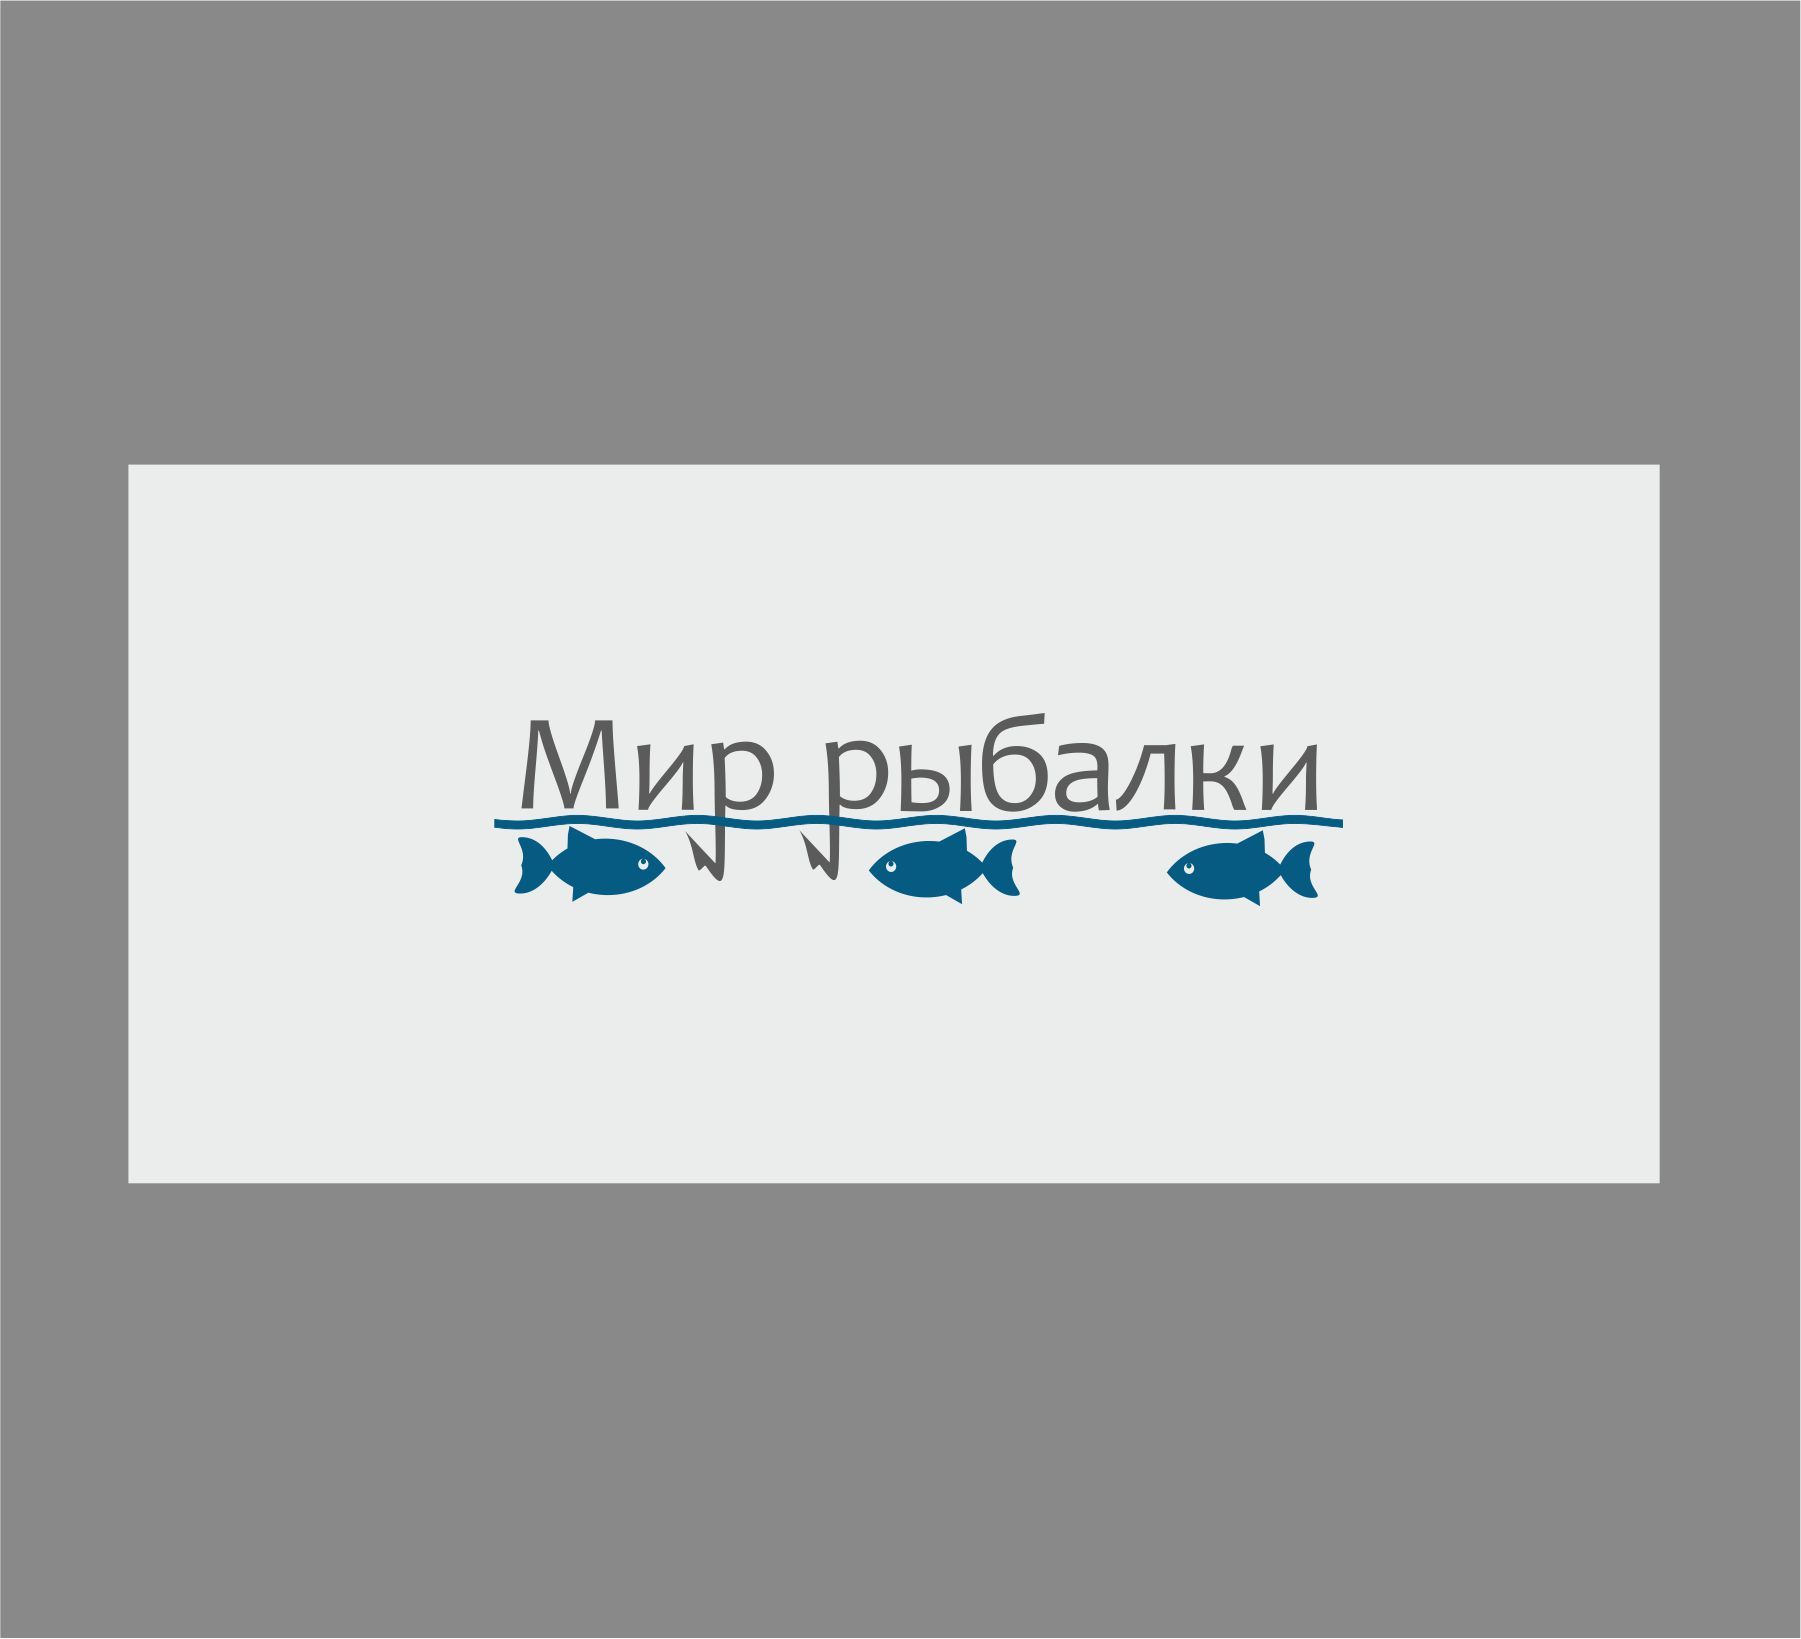 Логотип рыболовного магазина - дизайнер dbyjuhfl